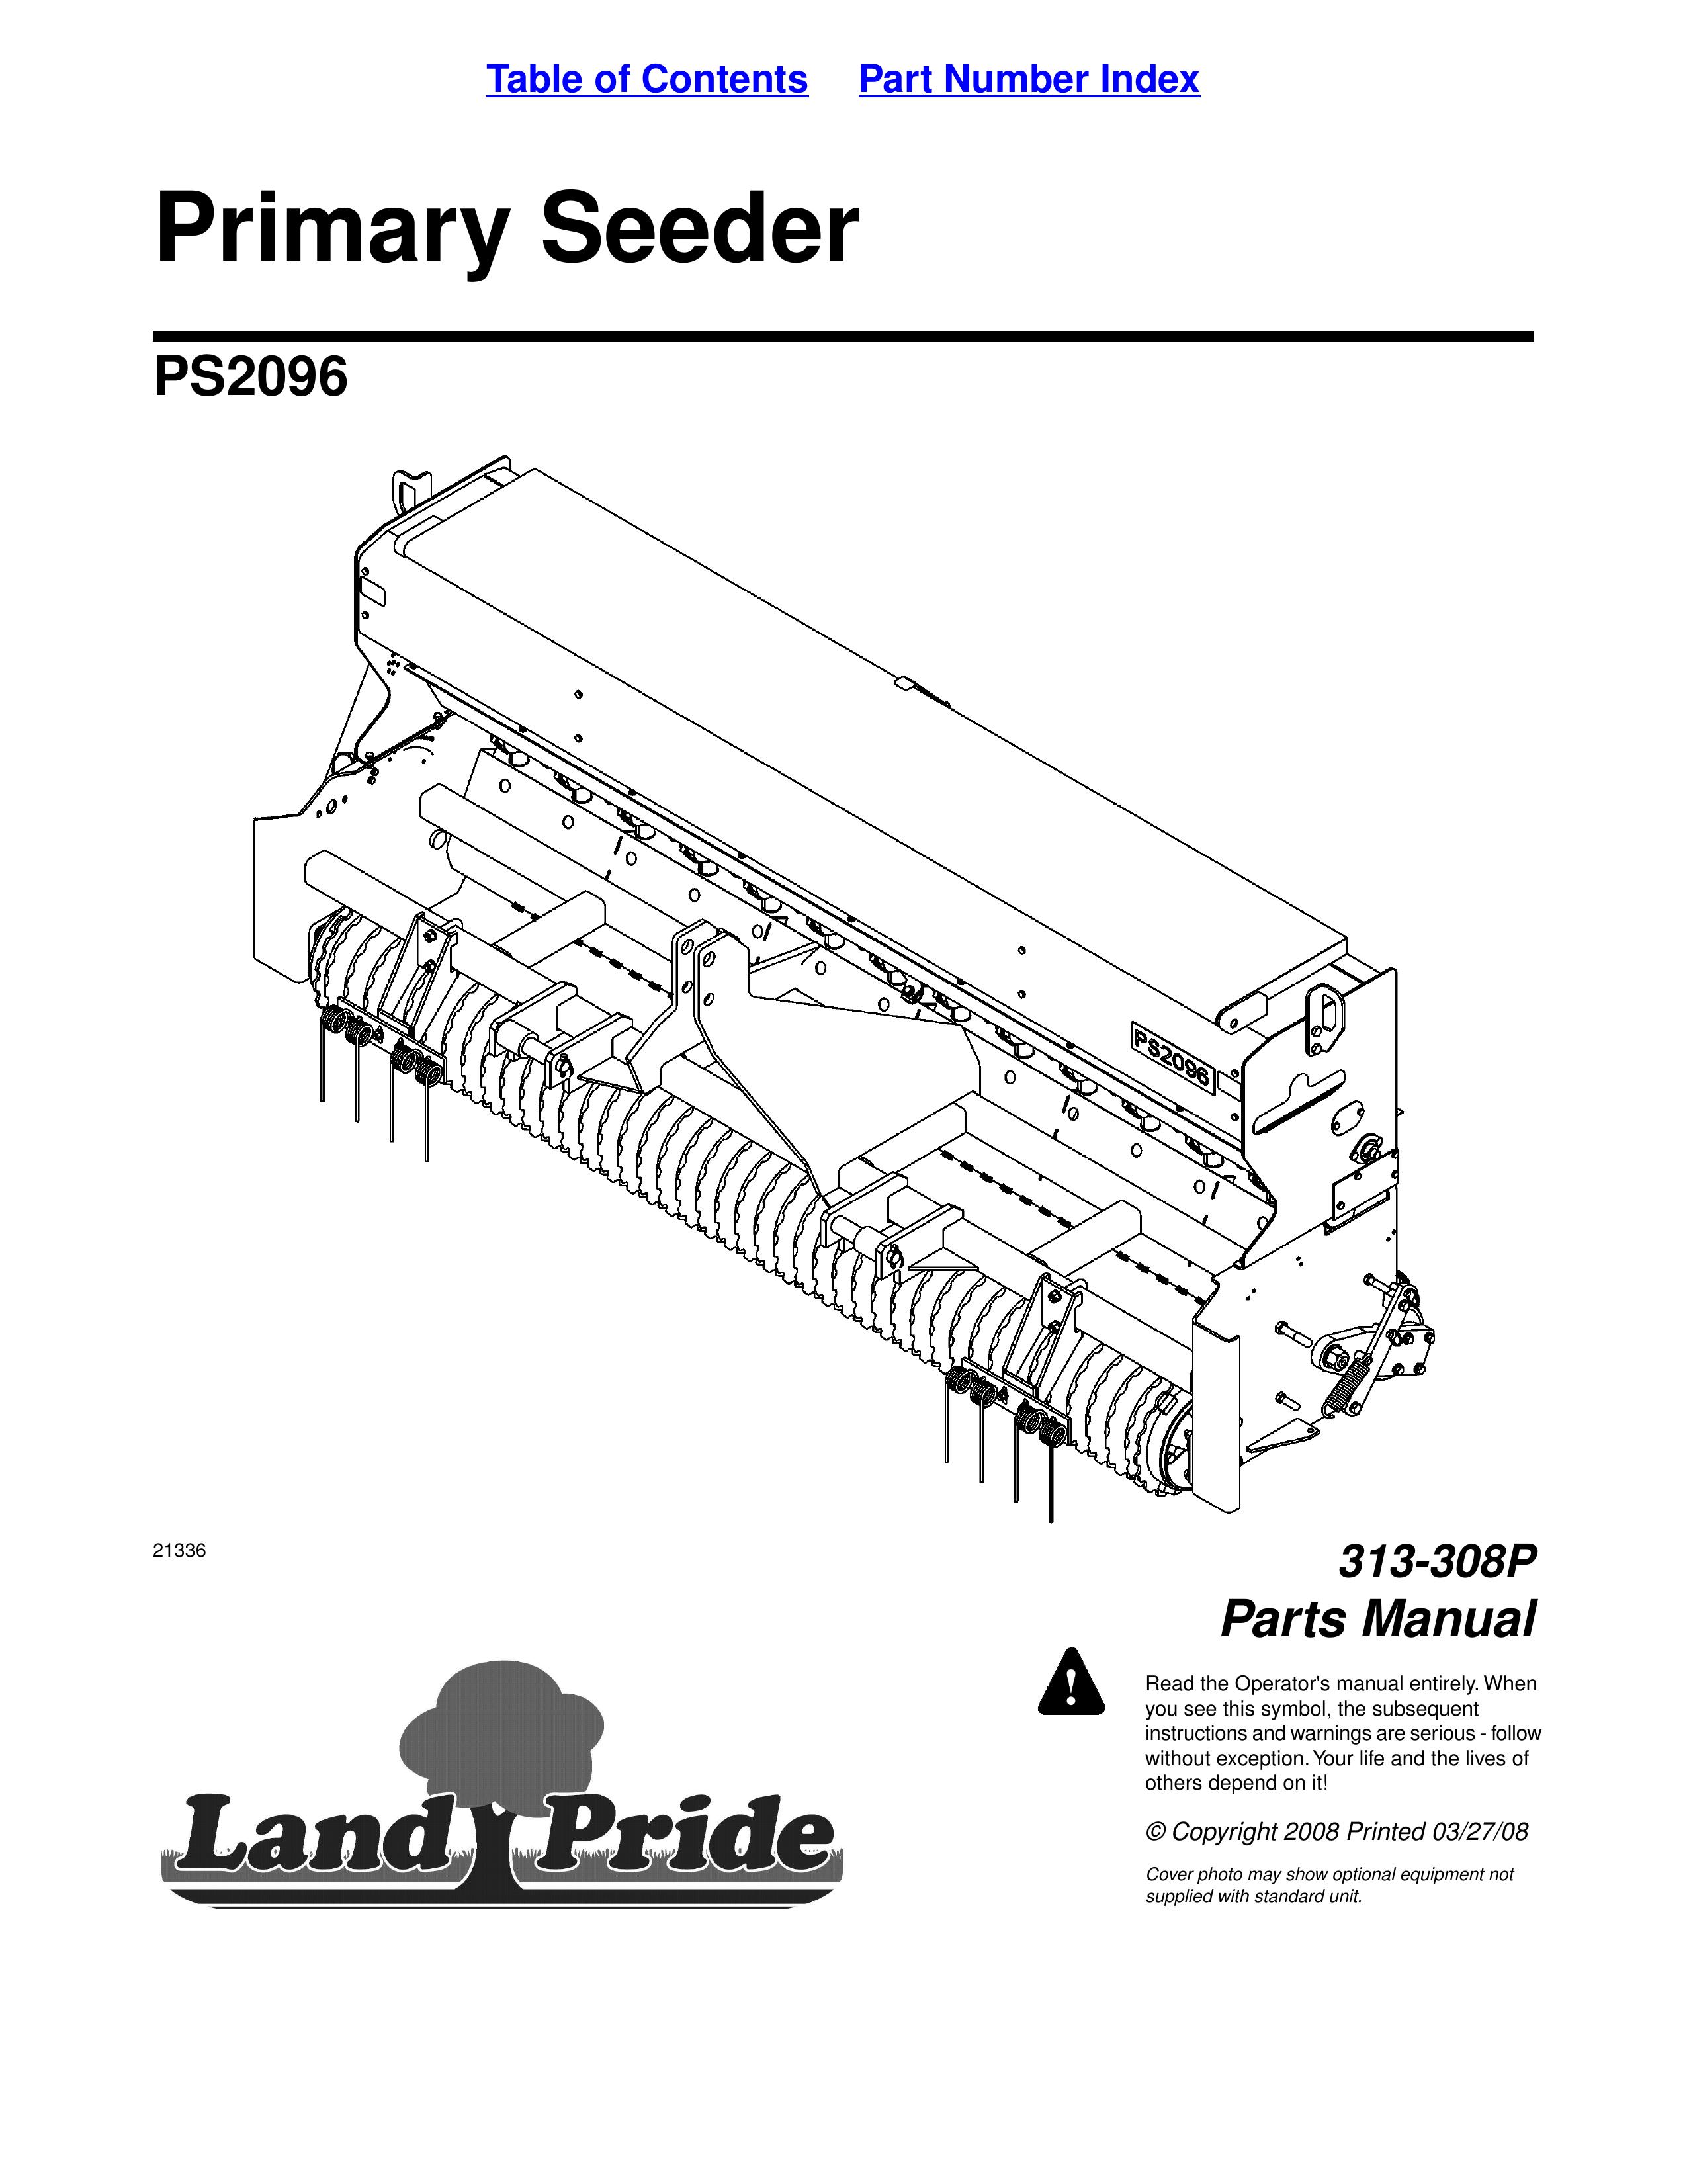 Land Pride PS2096 Spreader User Manual